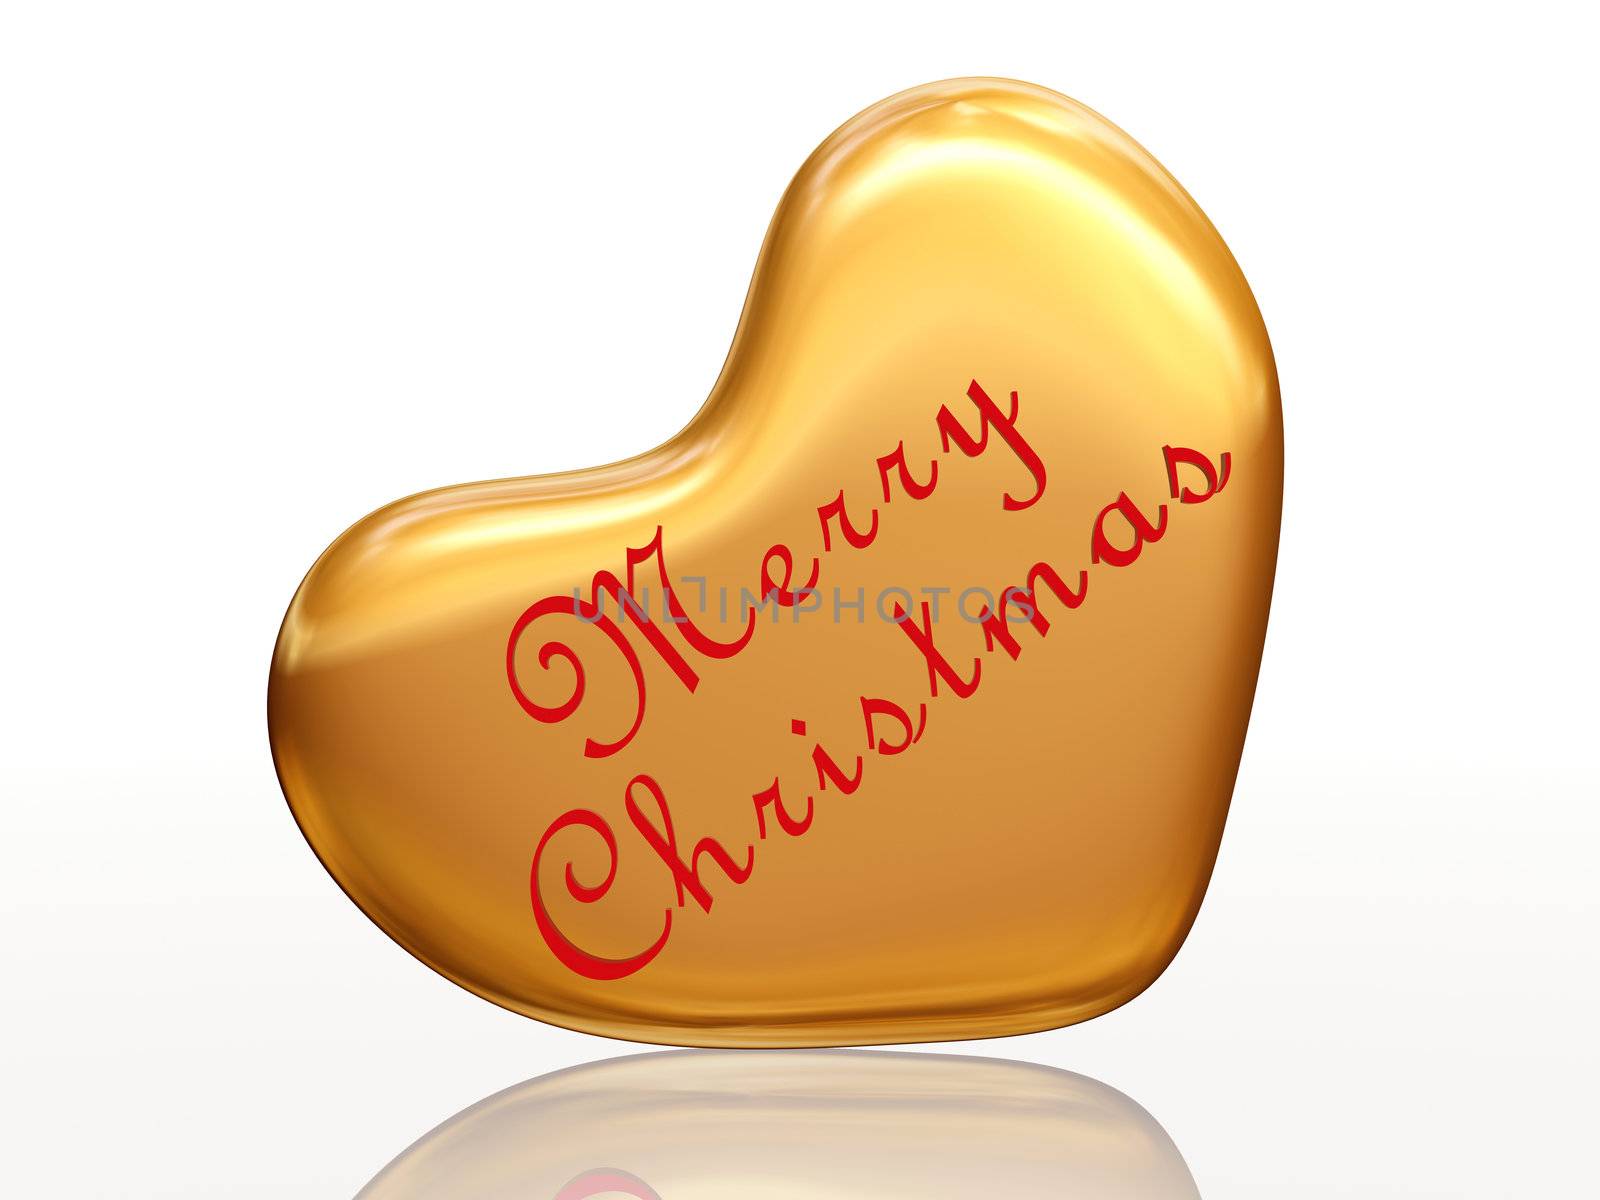 Merry Christmas in love by marinini